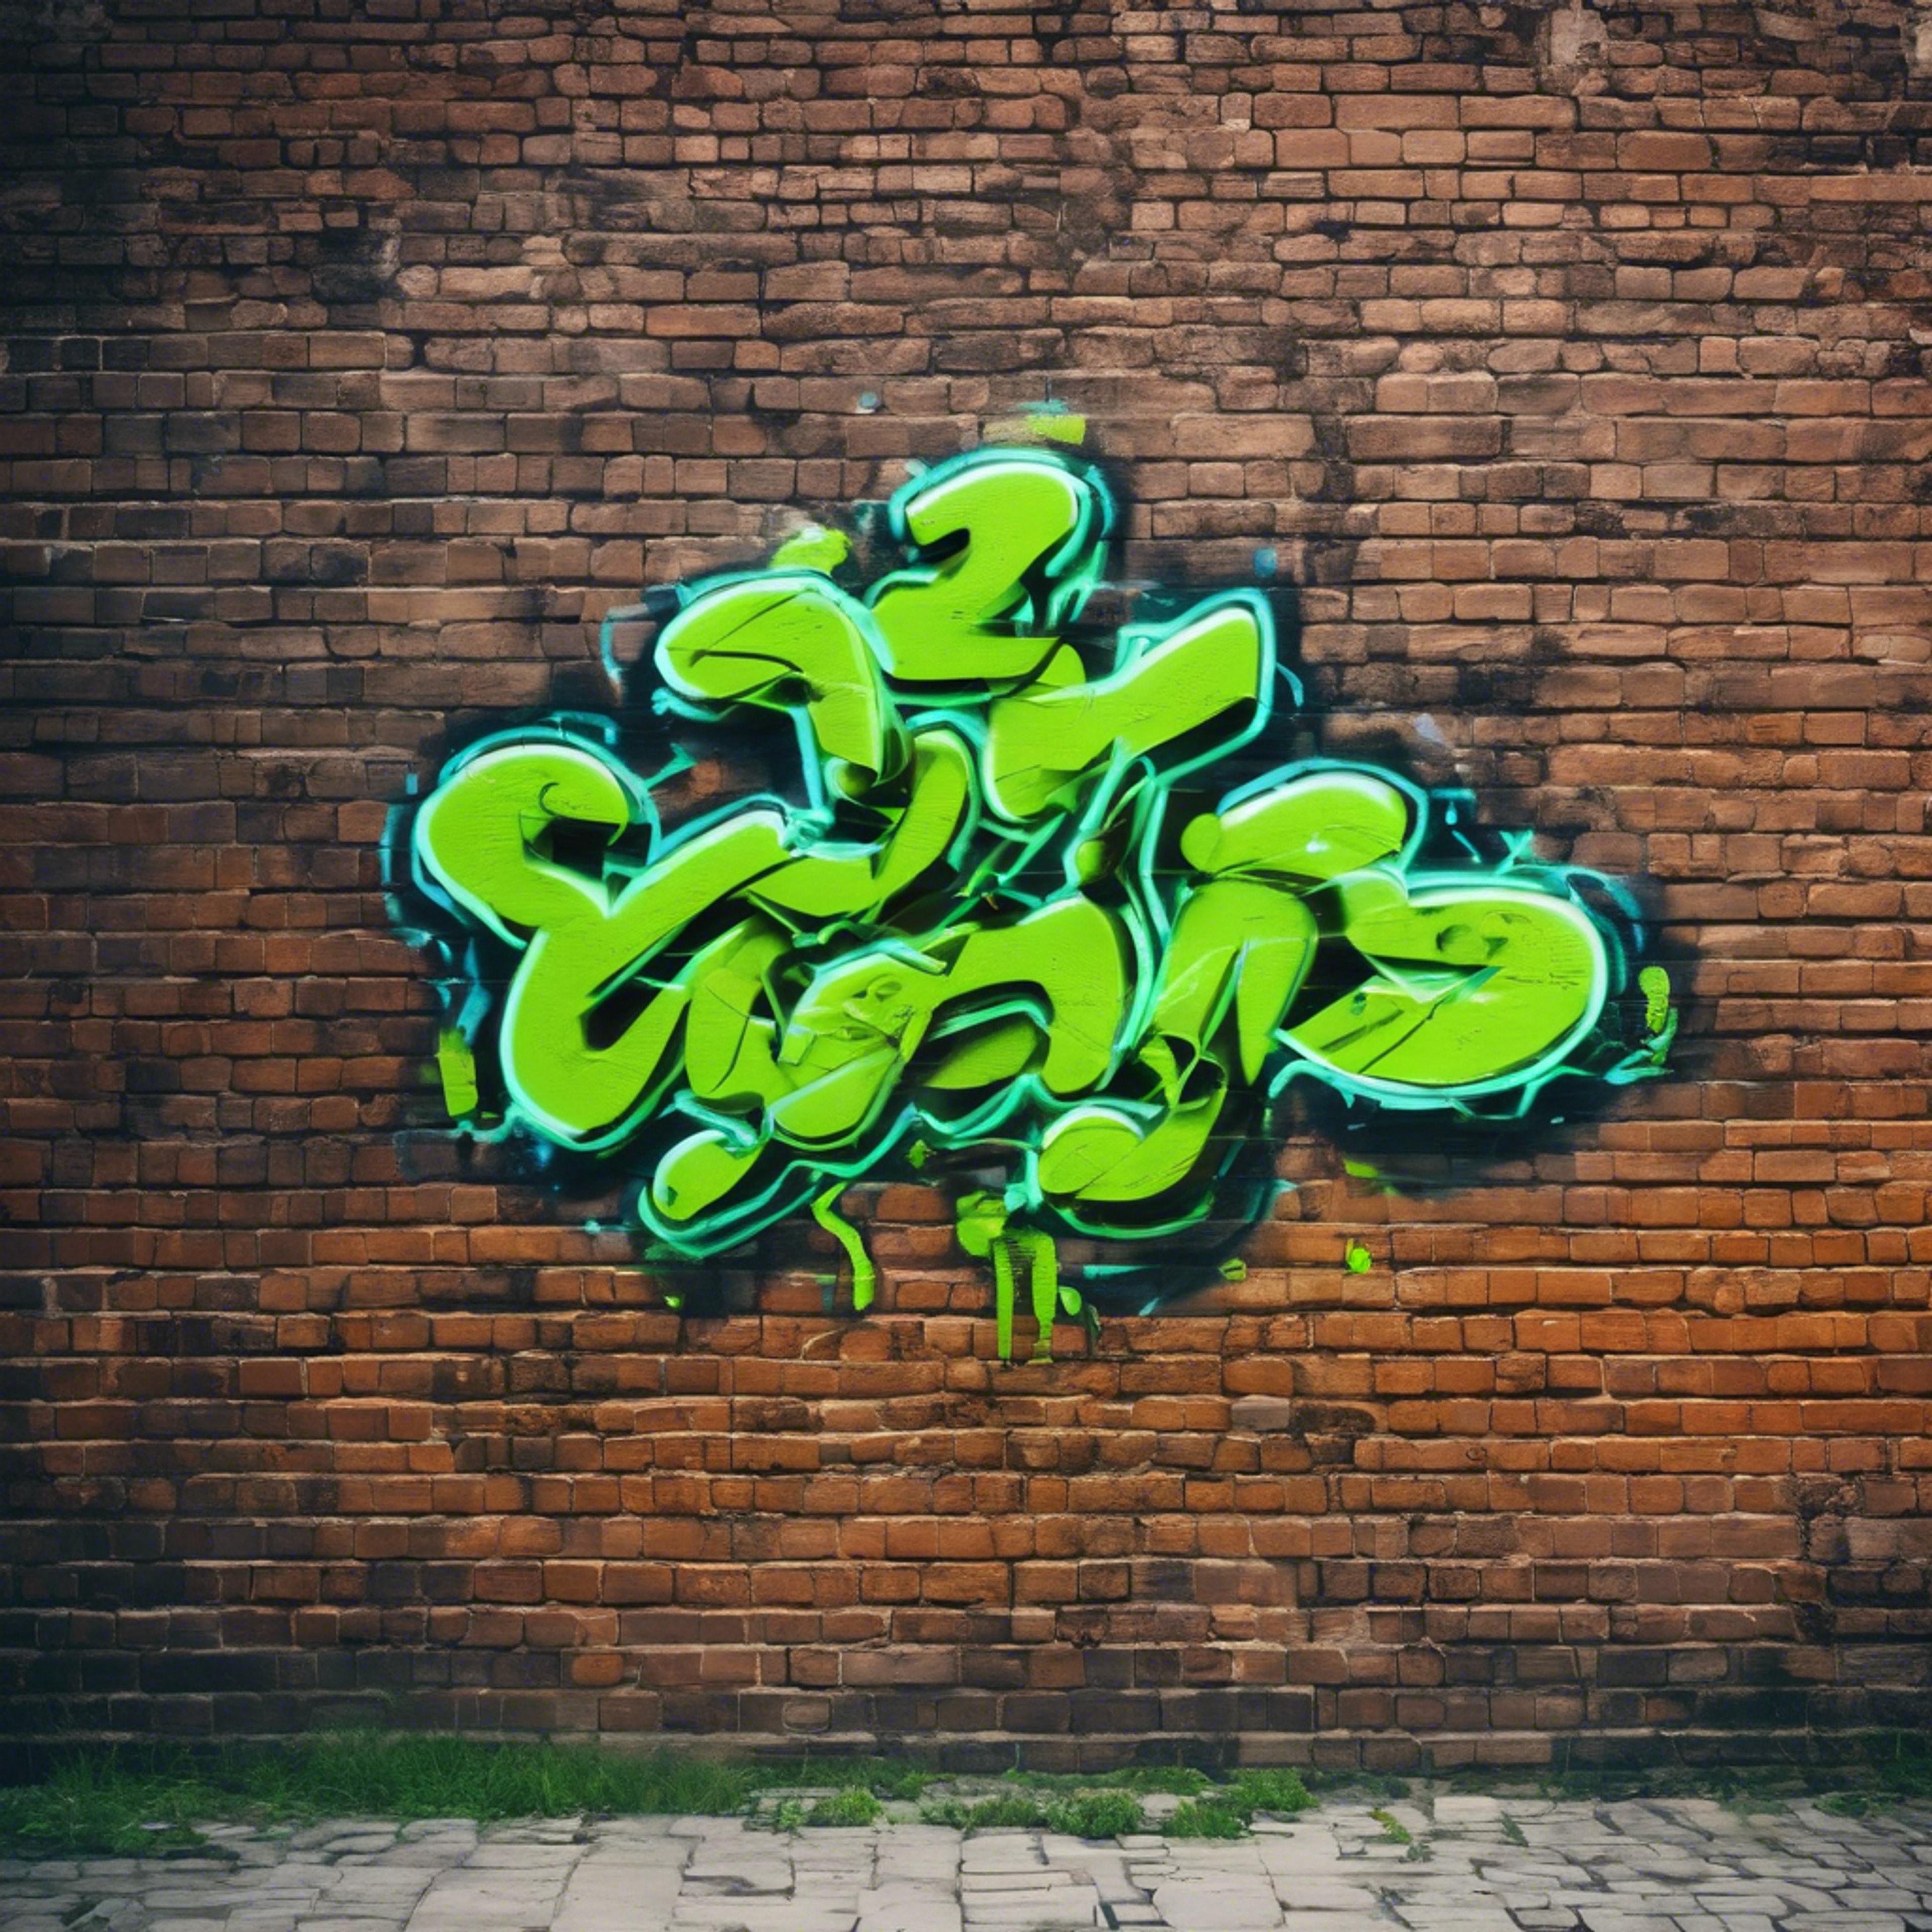 Cool neon green graffiti on an old brick wall in an urban setting. Wallpaper[8032604dbabf4a1691c6]